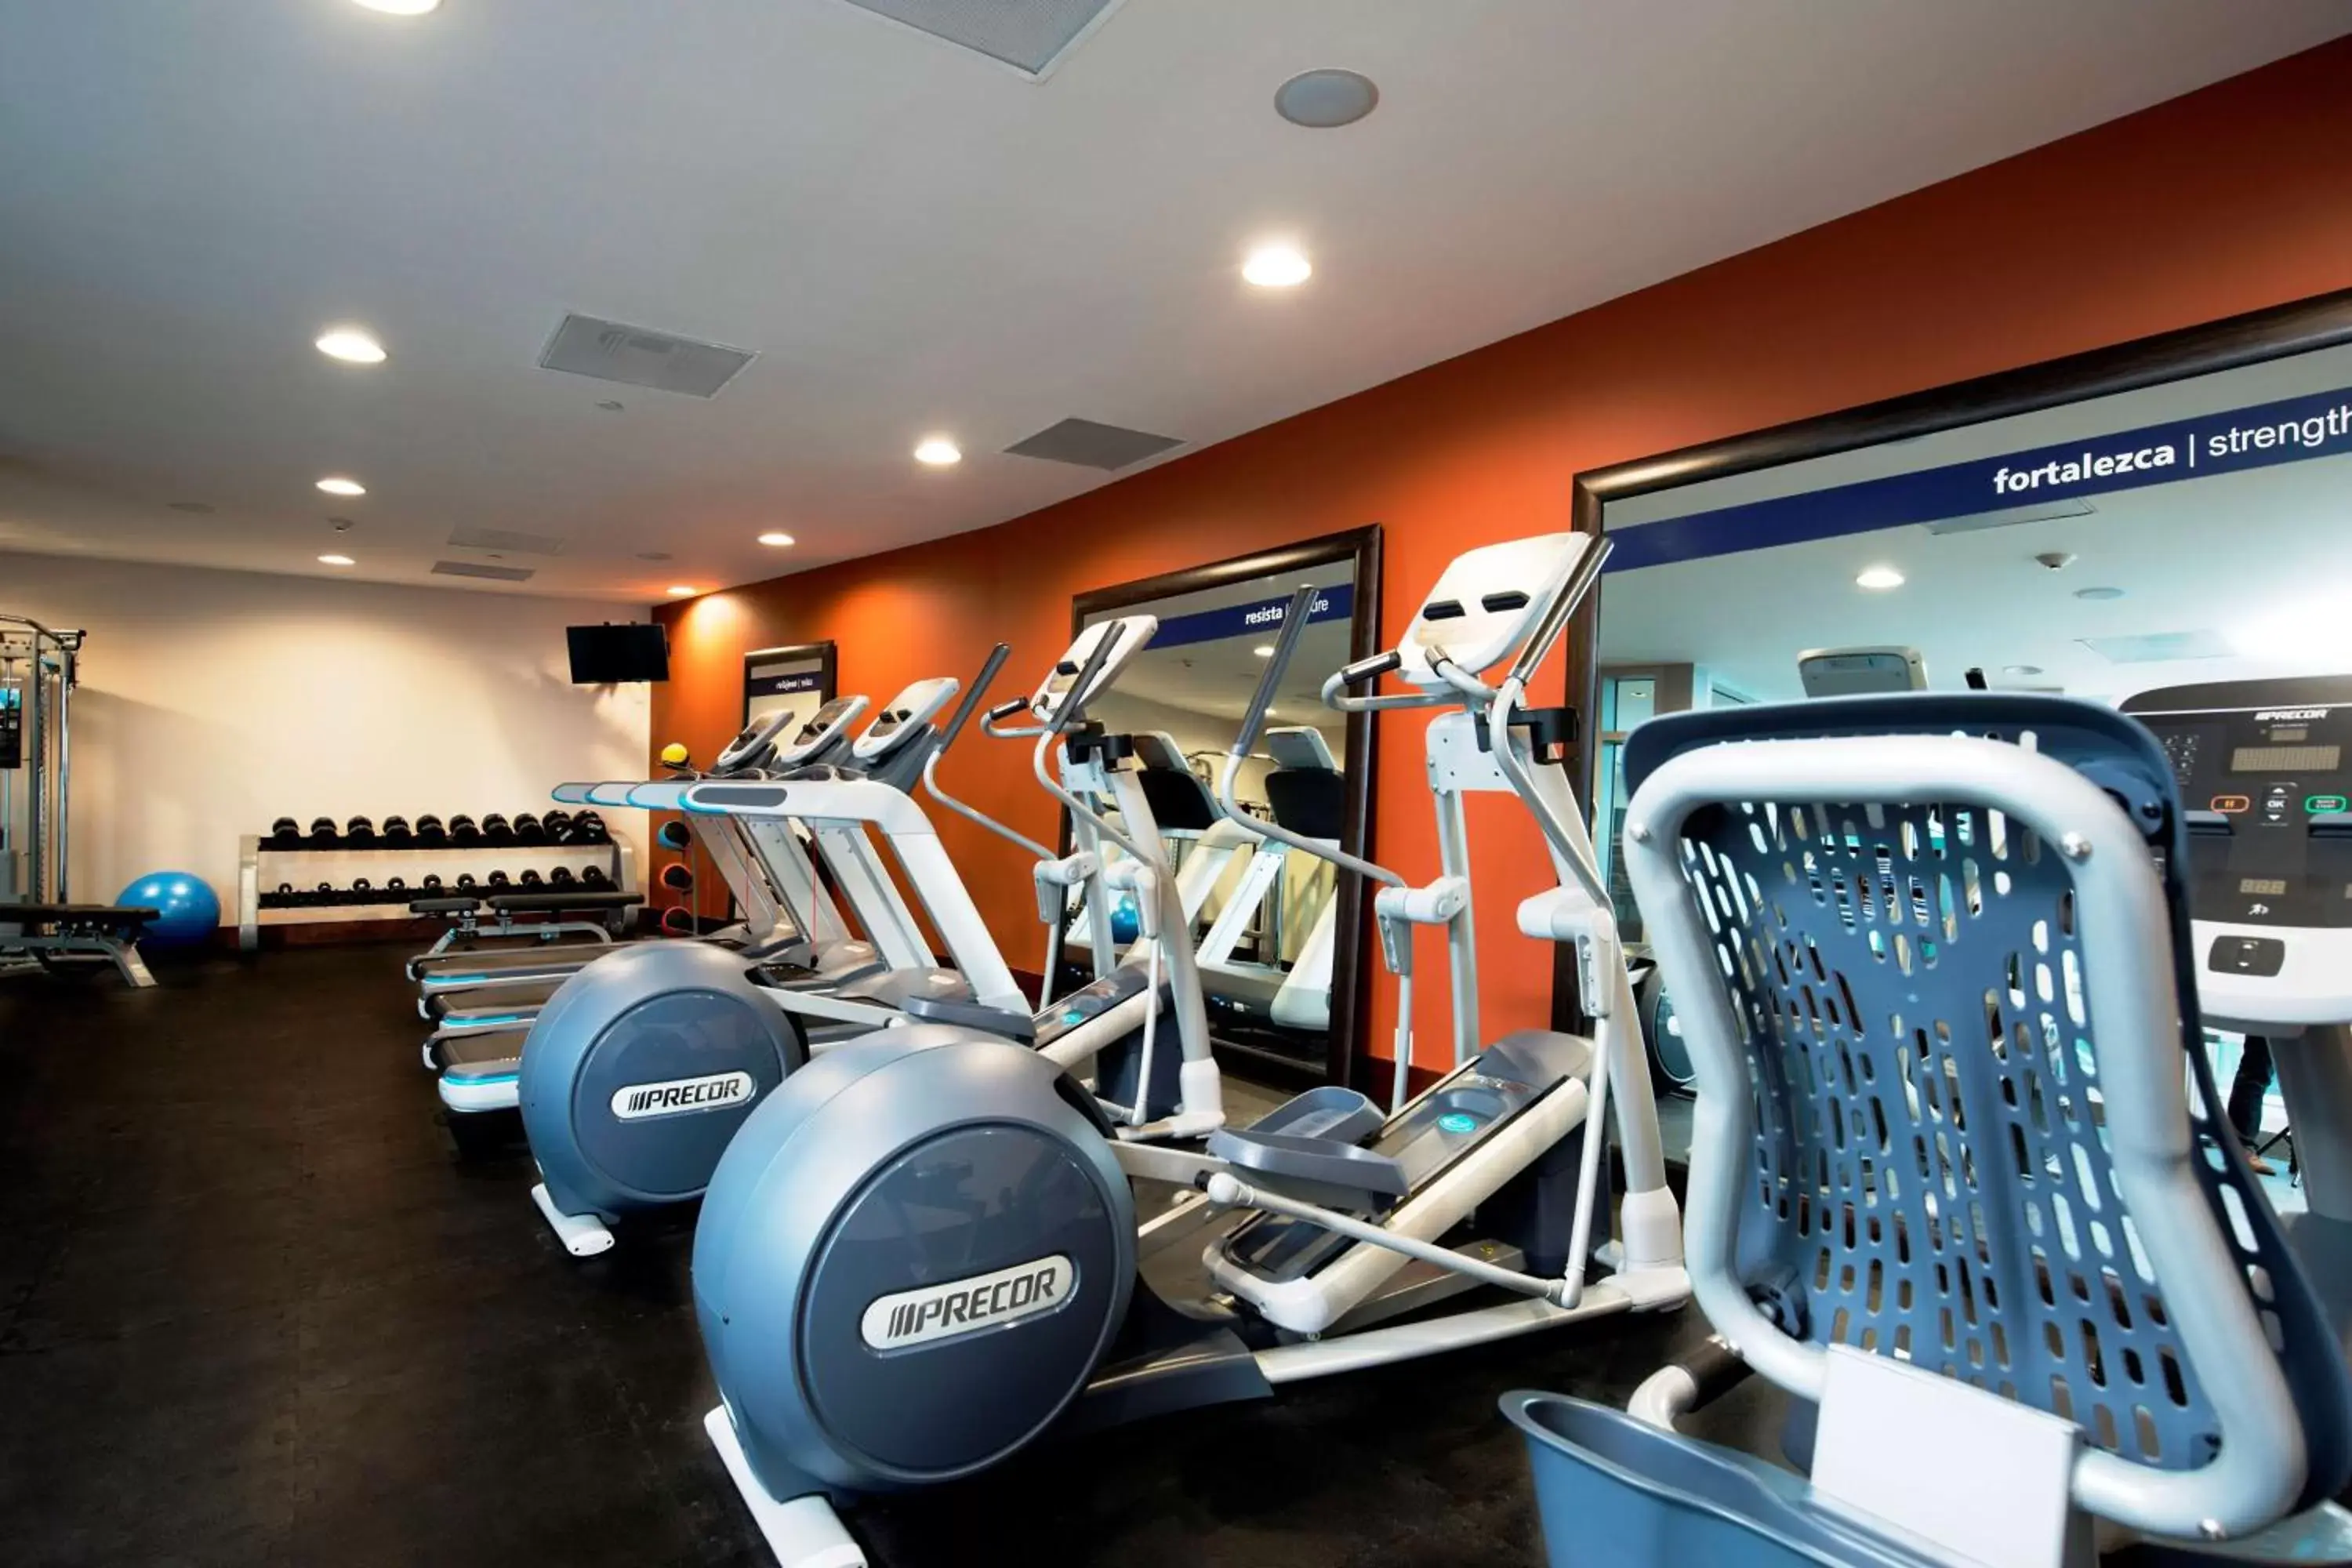 Fitness centre/facilities, Fitness Center/Facilities in Hampton Inn by Hilton Leon